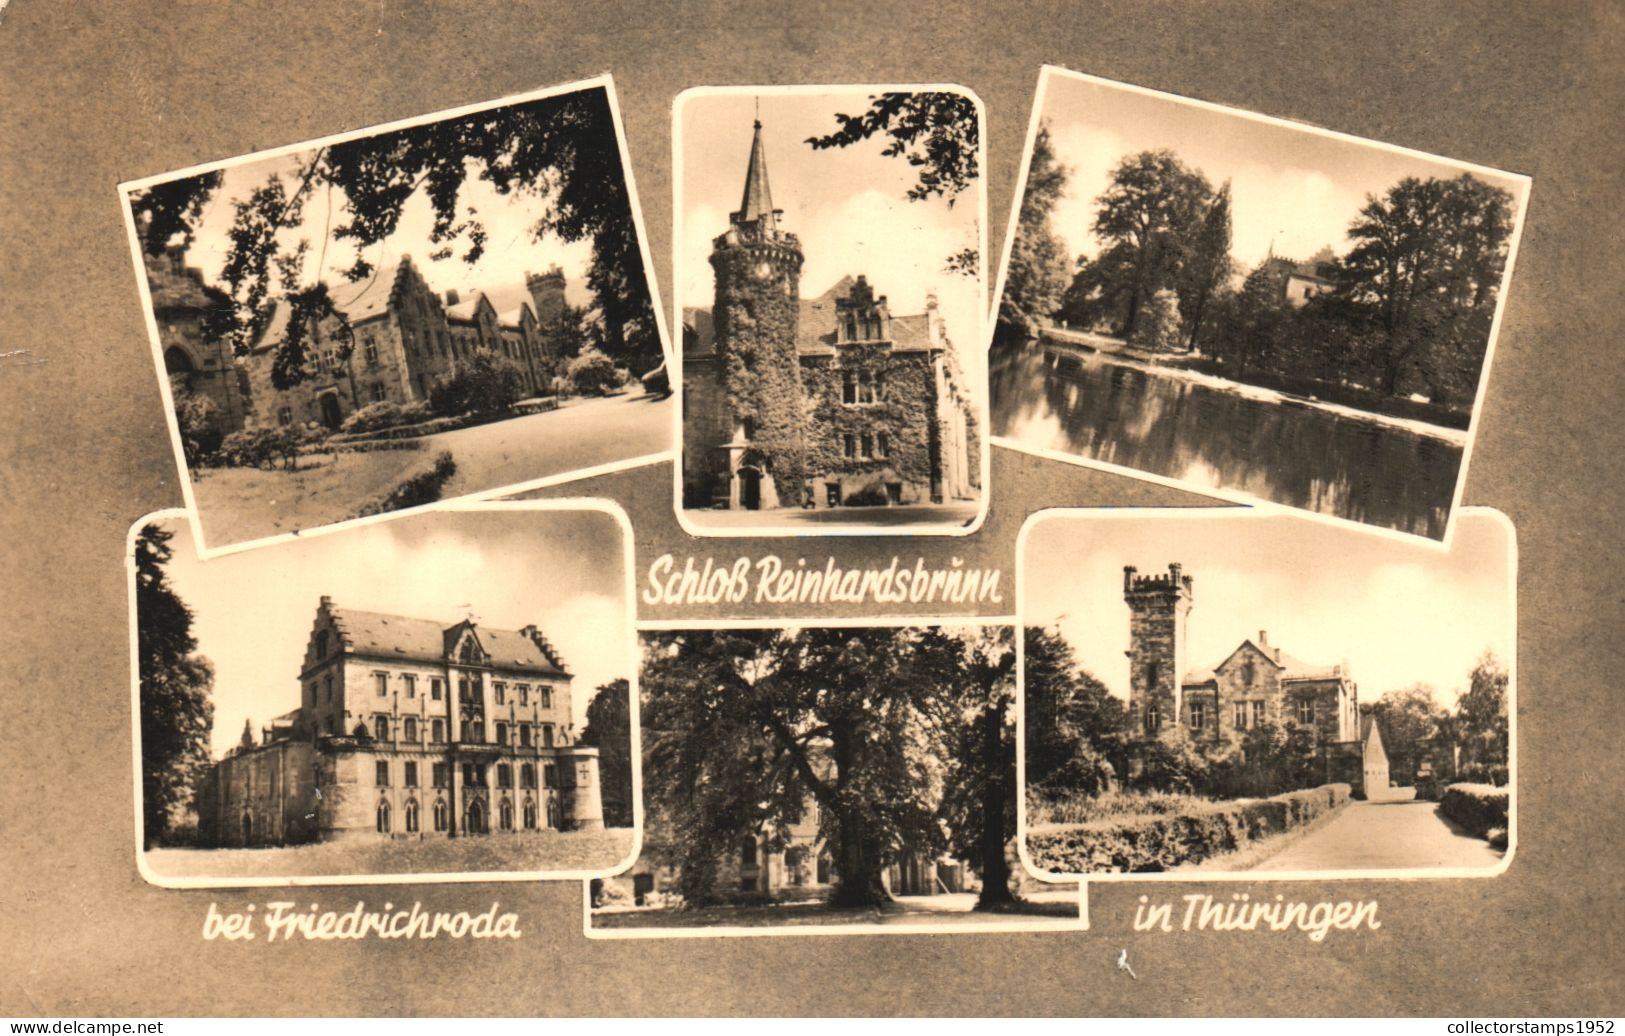 FRIEDRICHRODA, THURINGIA, MULTIPLE VIEWS, REINHARDSBRUNN CASTLE, TOWER, ARCHITECTURE, GERMANY, POSTCARD - Friedrichroda